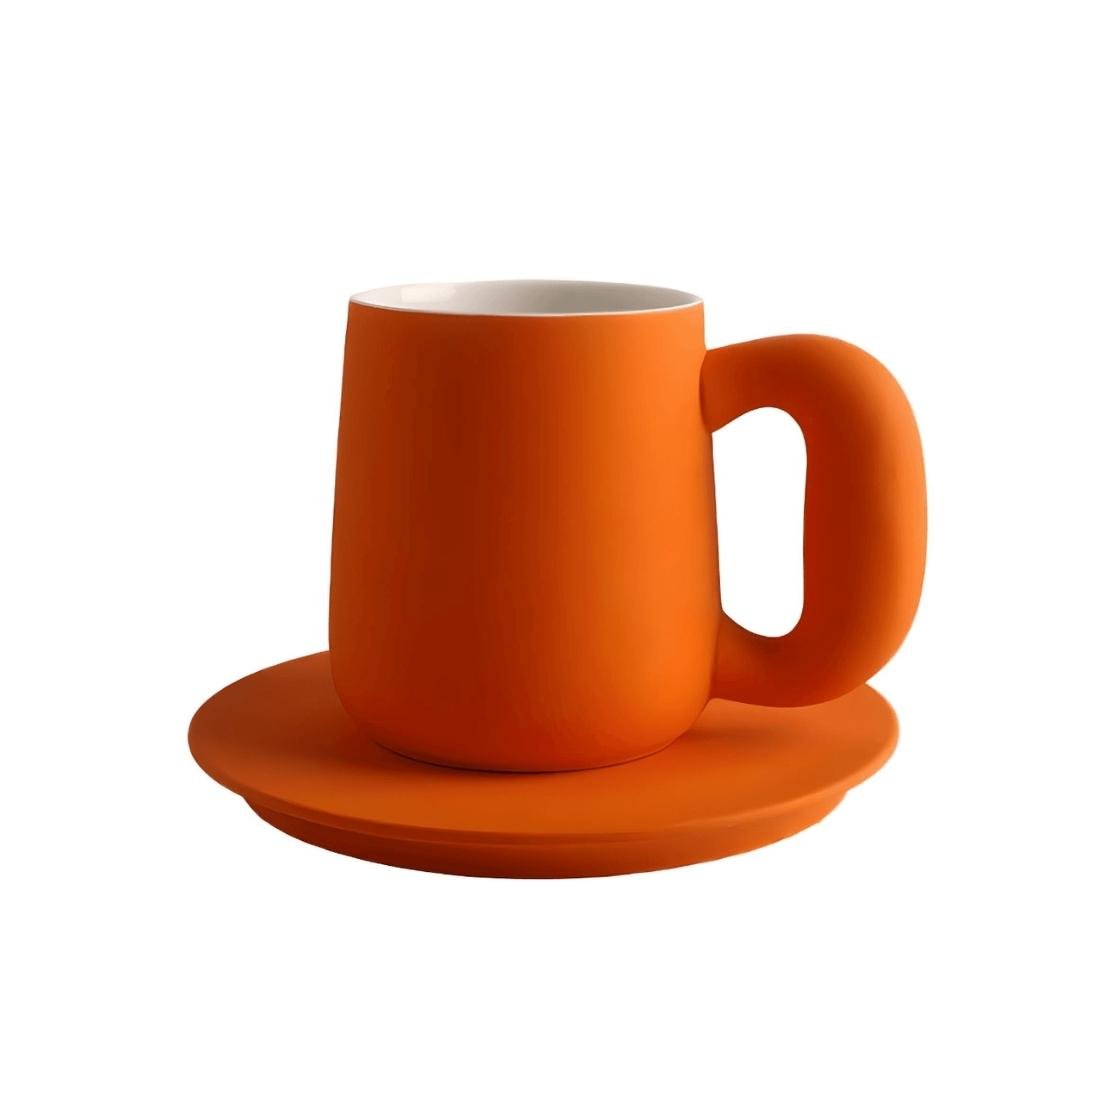 Groovy orange ceramic mug with saucer